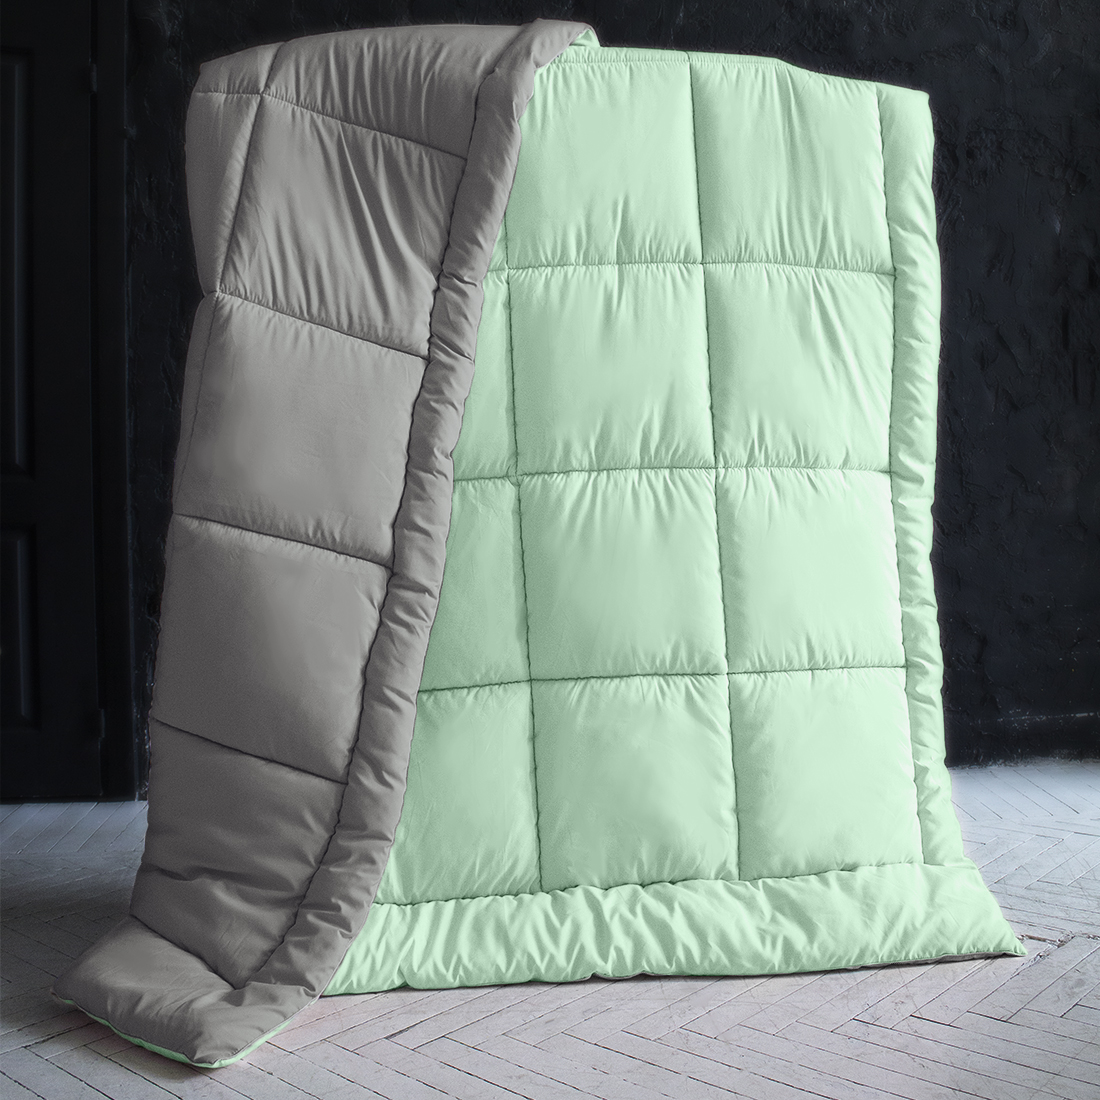 Одеяло MultiColor цвет: светло-мятный, серый (140х205 см), размер 140х205 см pva410889 Одеяло MultiColor цвет: светло-мятный, серый (140х205 см) - фото 1